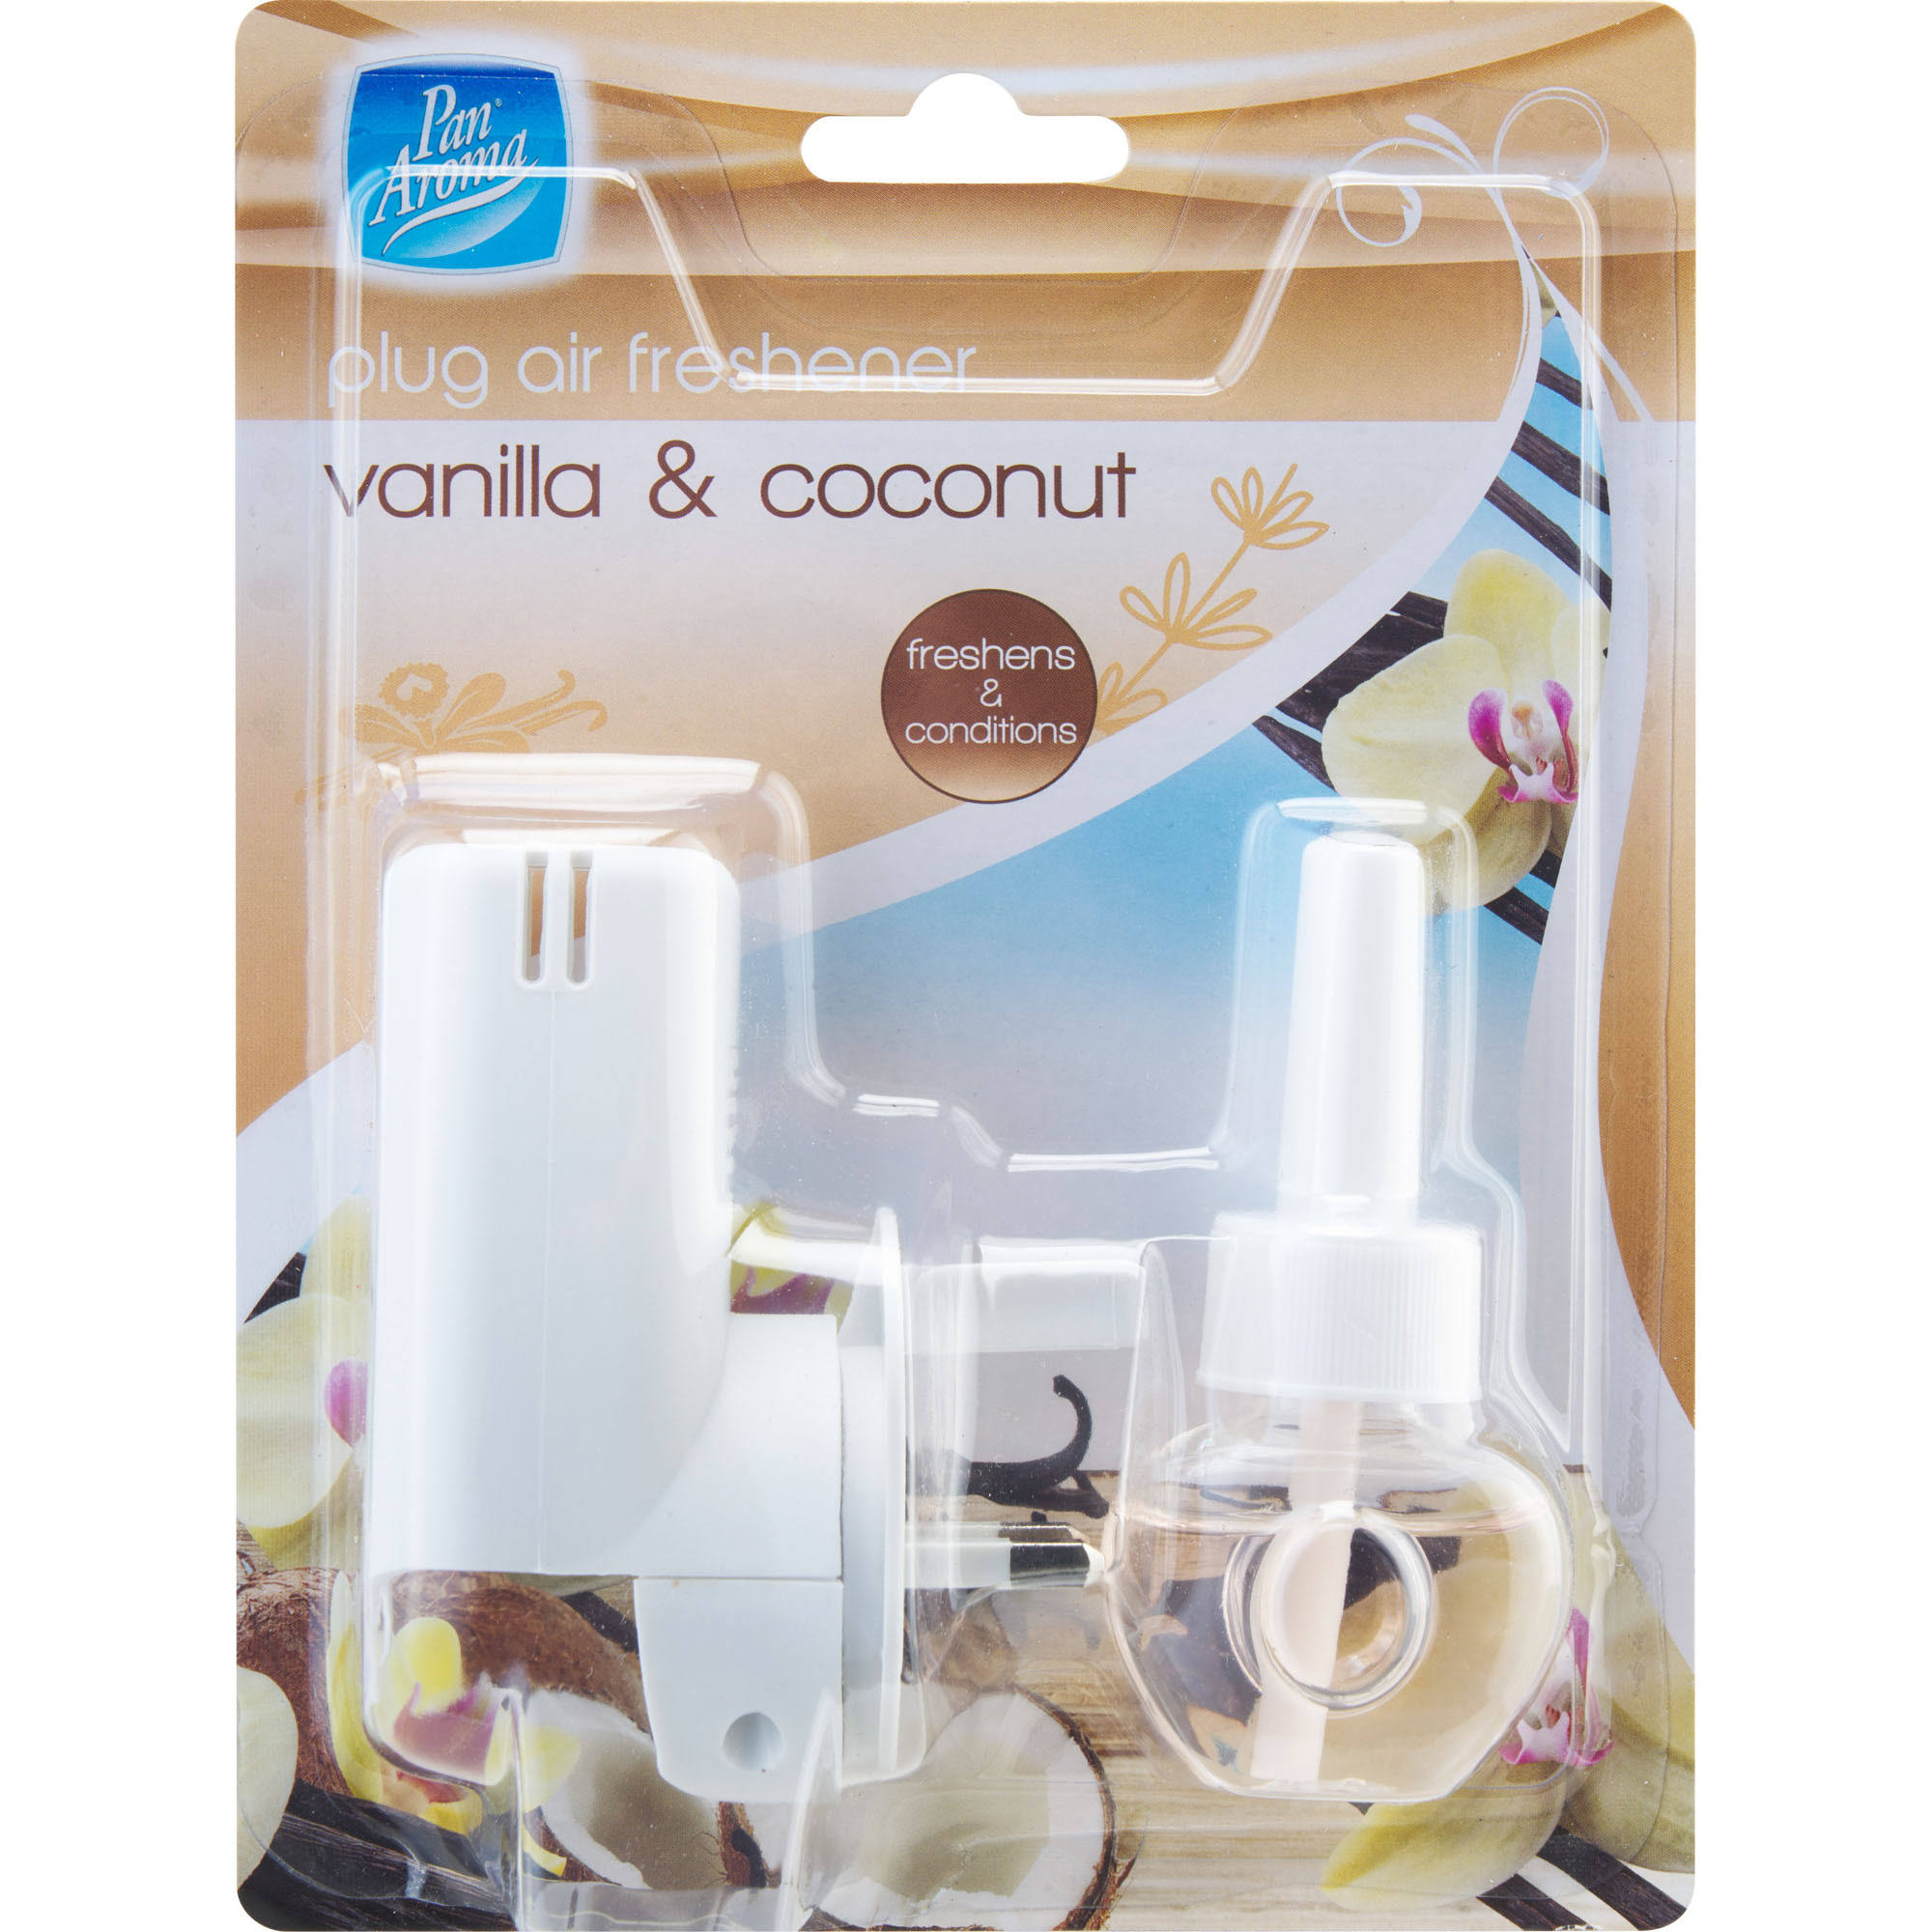 Pan Aroma Plug in Air Freshener Vanilla & Coconut